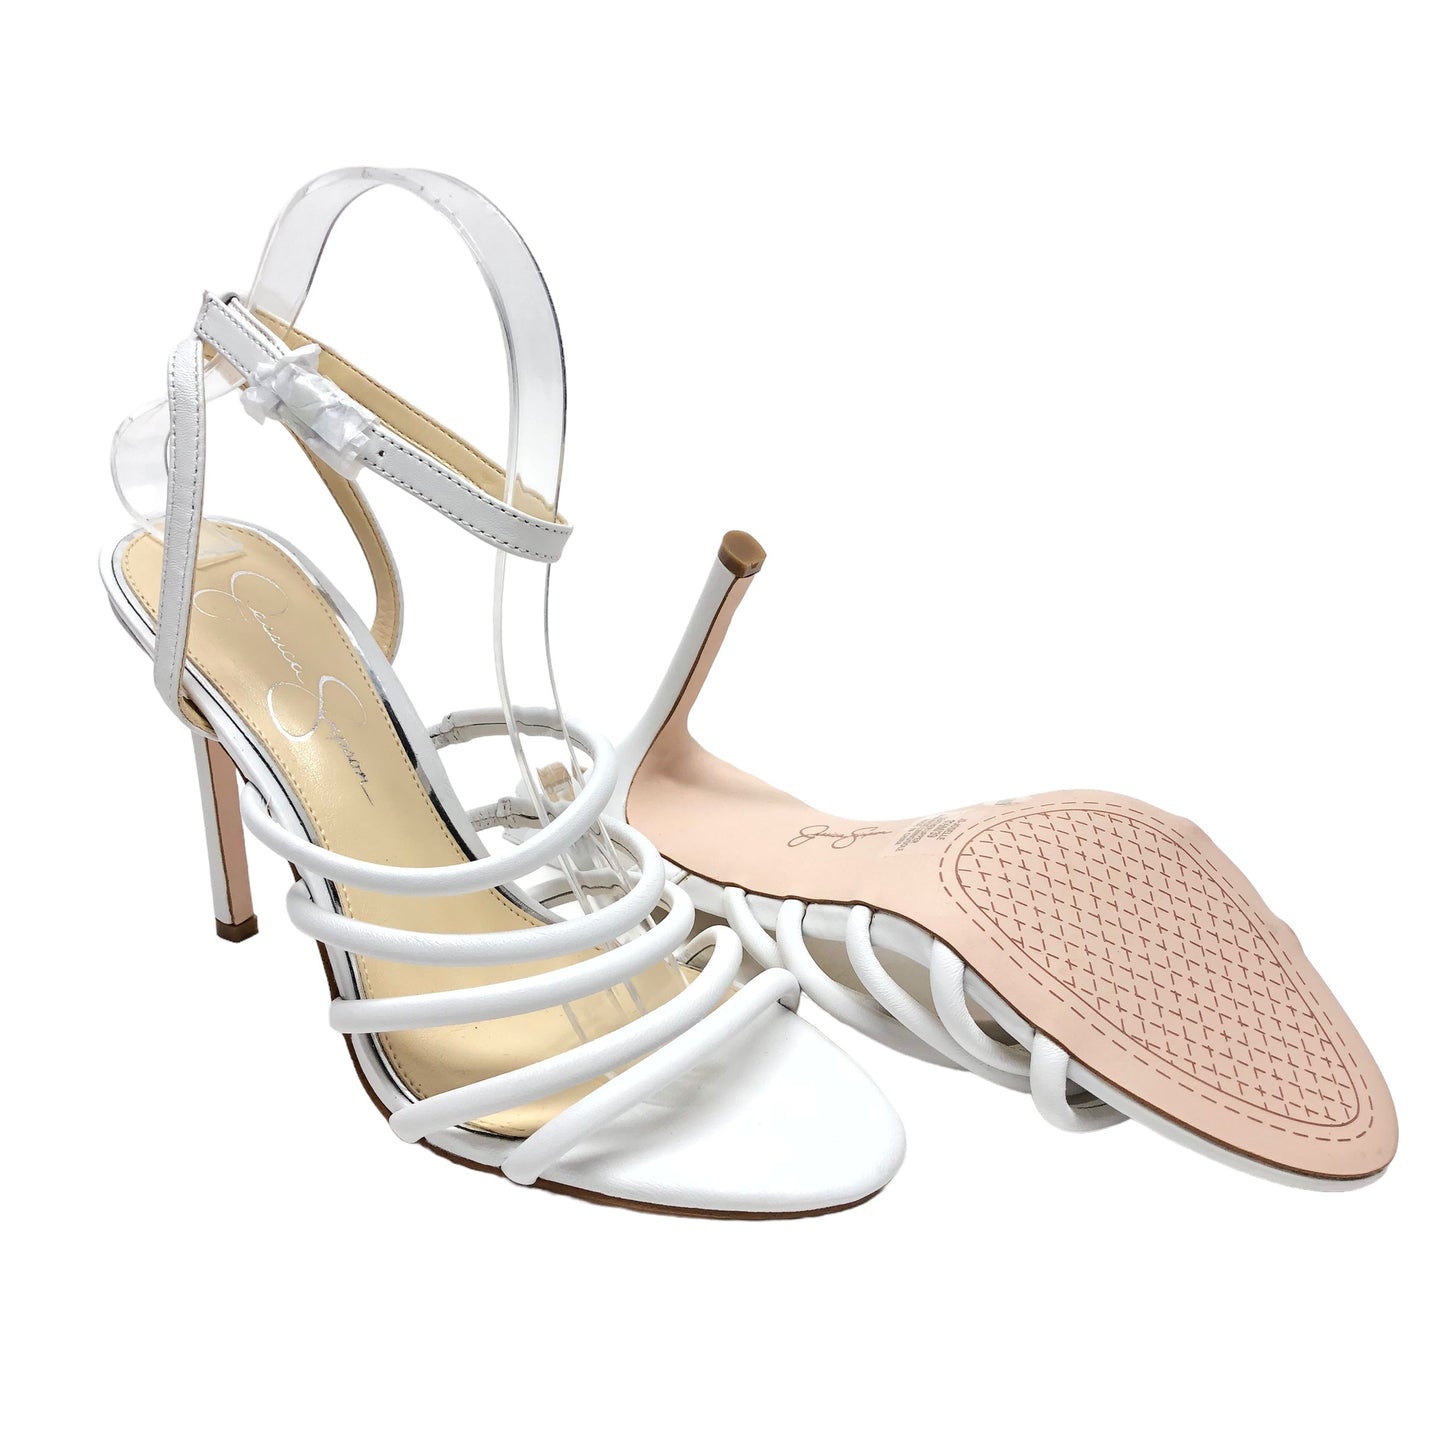 White Sandals Heels Stiletto Jessica Simpson, Size 8.5